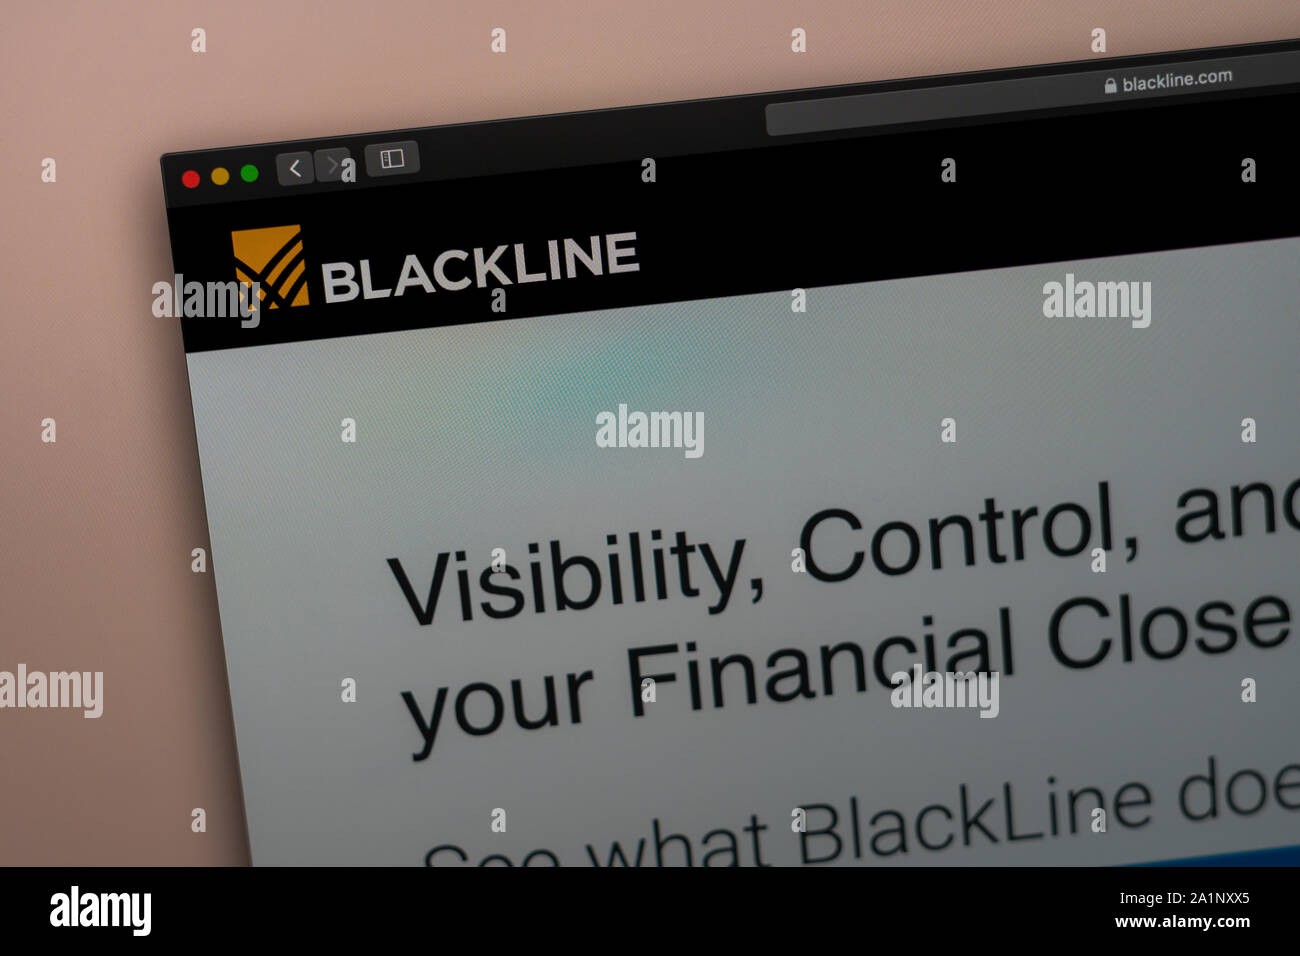 Tallinn/Estonia - September 27, 2019: Blackline company website homepage. Close up of Blackline logo. Can be used as illustrative for news media or  b Stock Photo